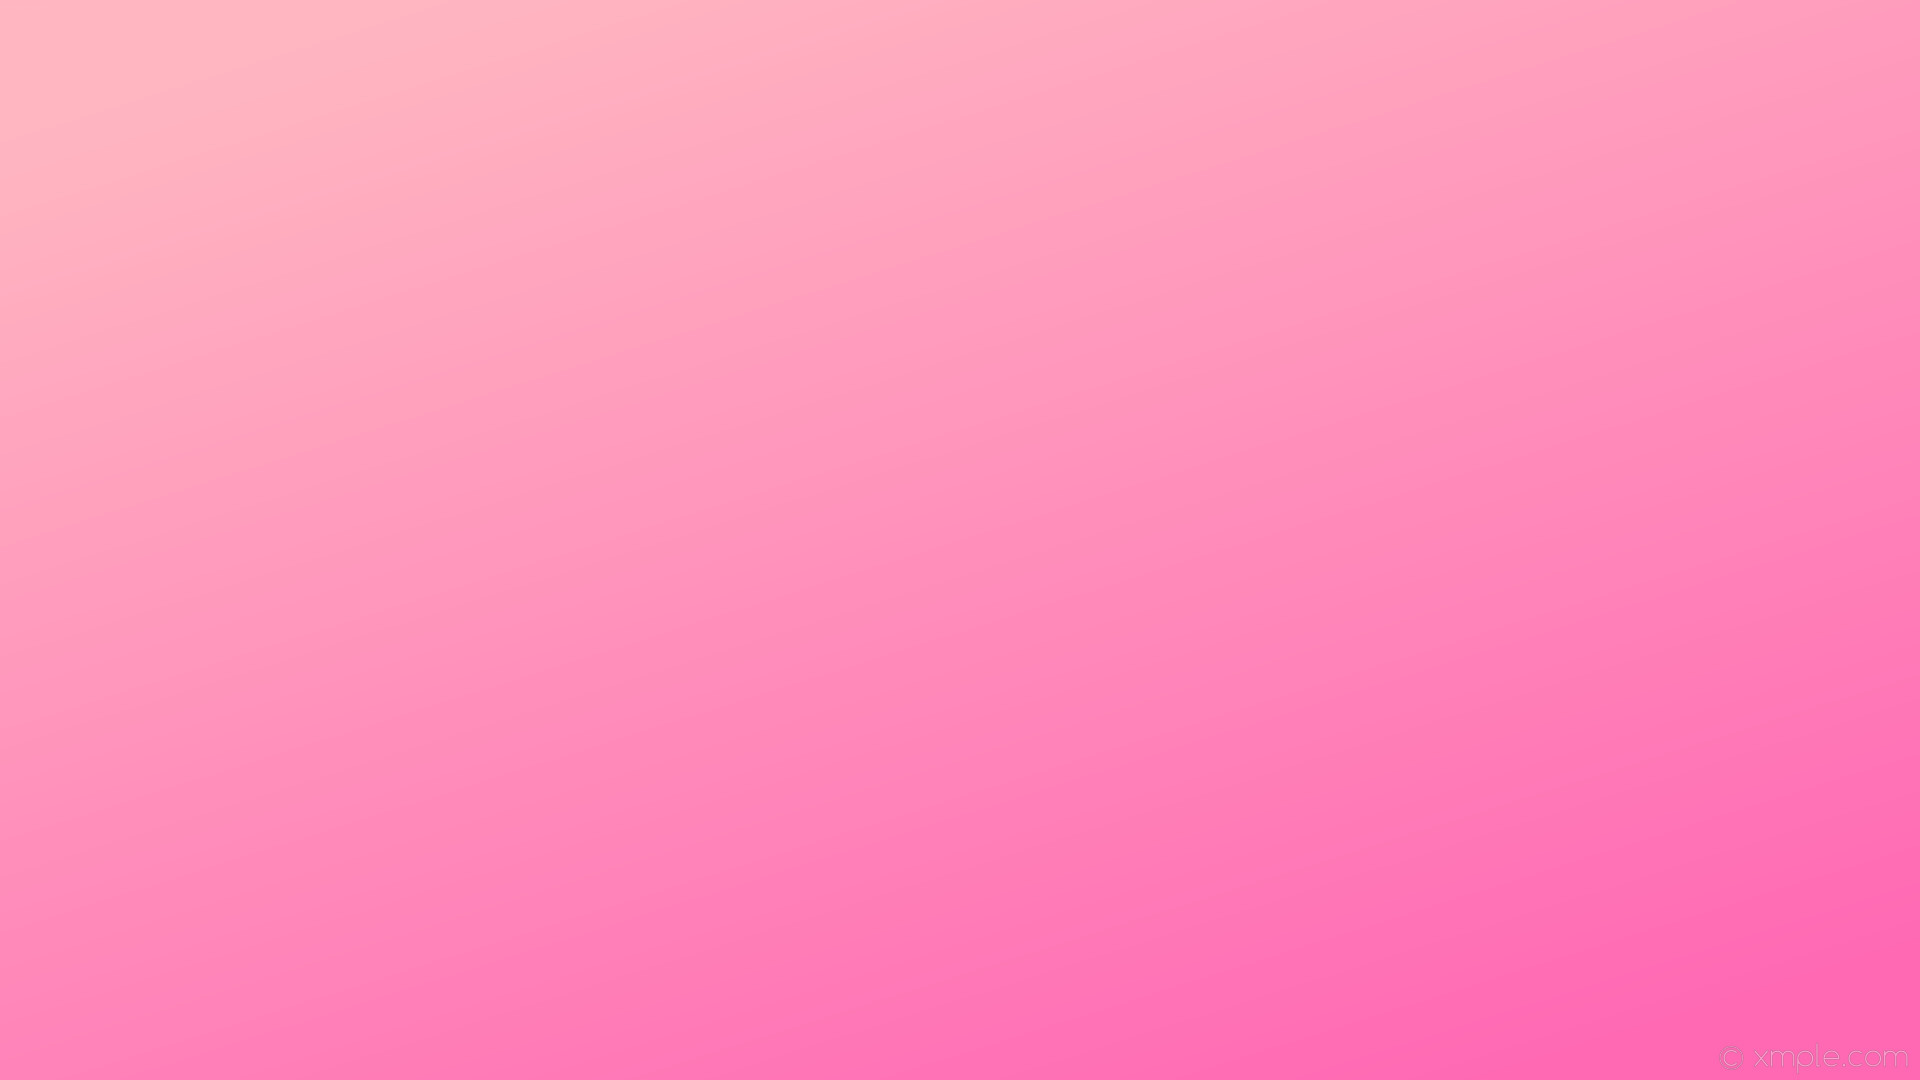 1920x1080 wallpaper linear pink gradient light pink hot pink #ffb6c1 #ff69b4 135Â°